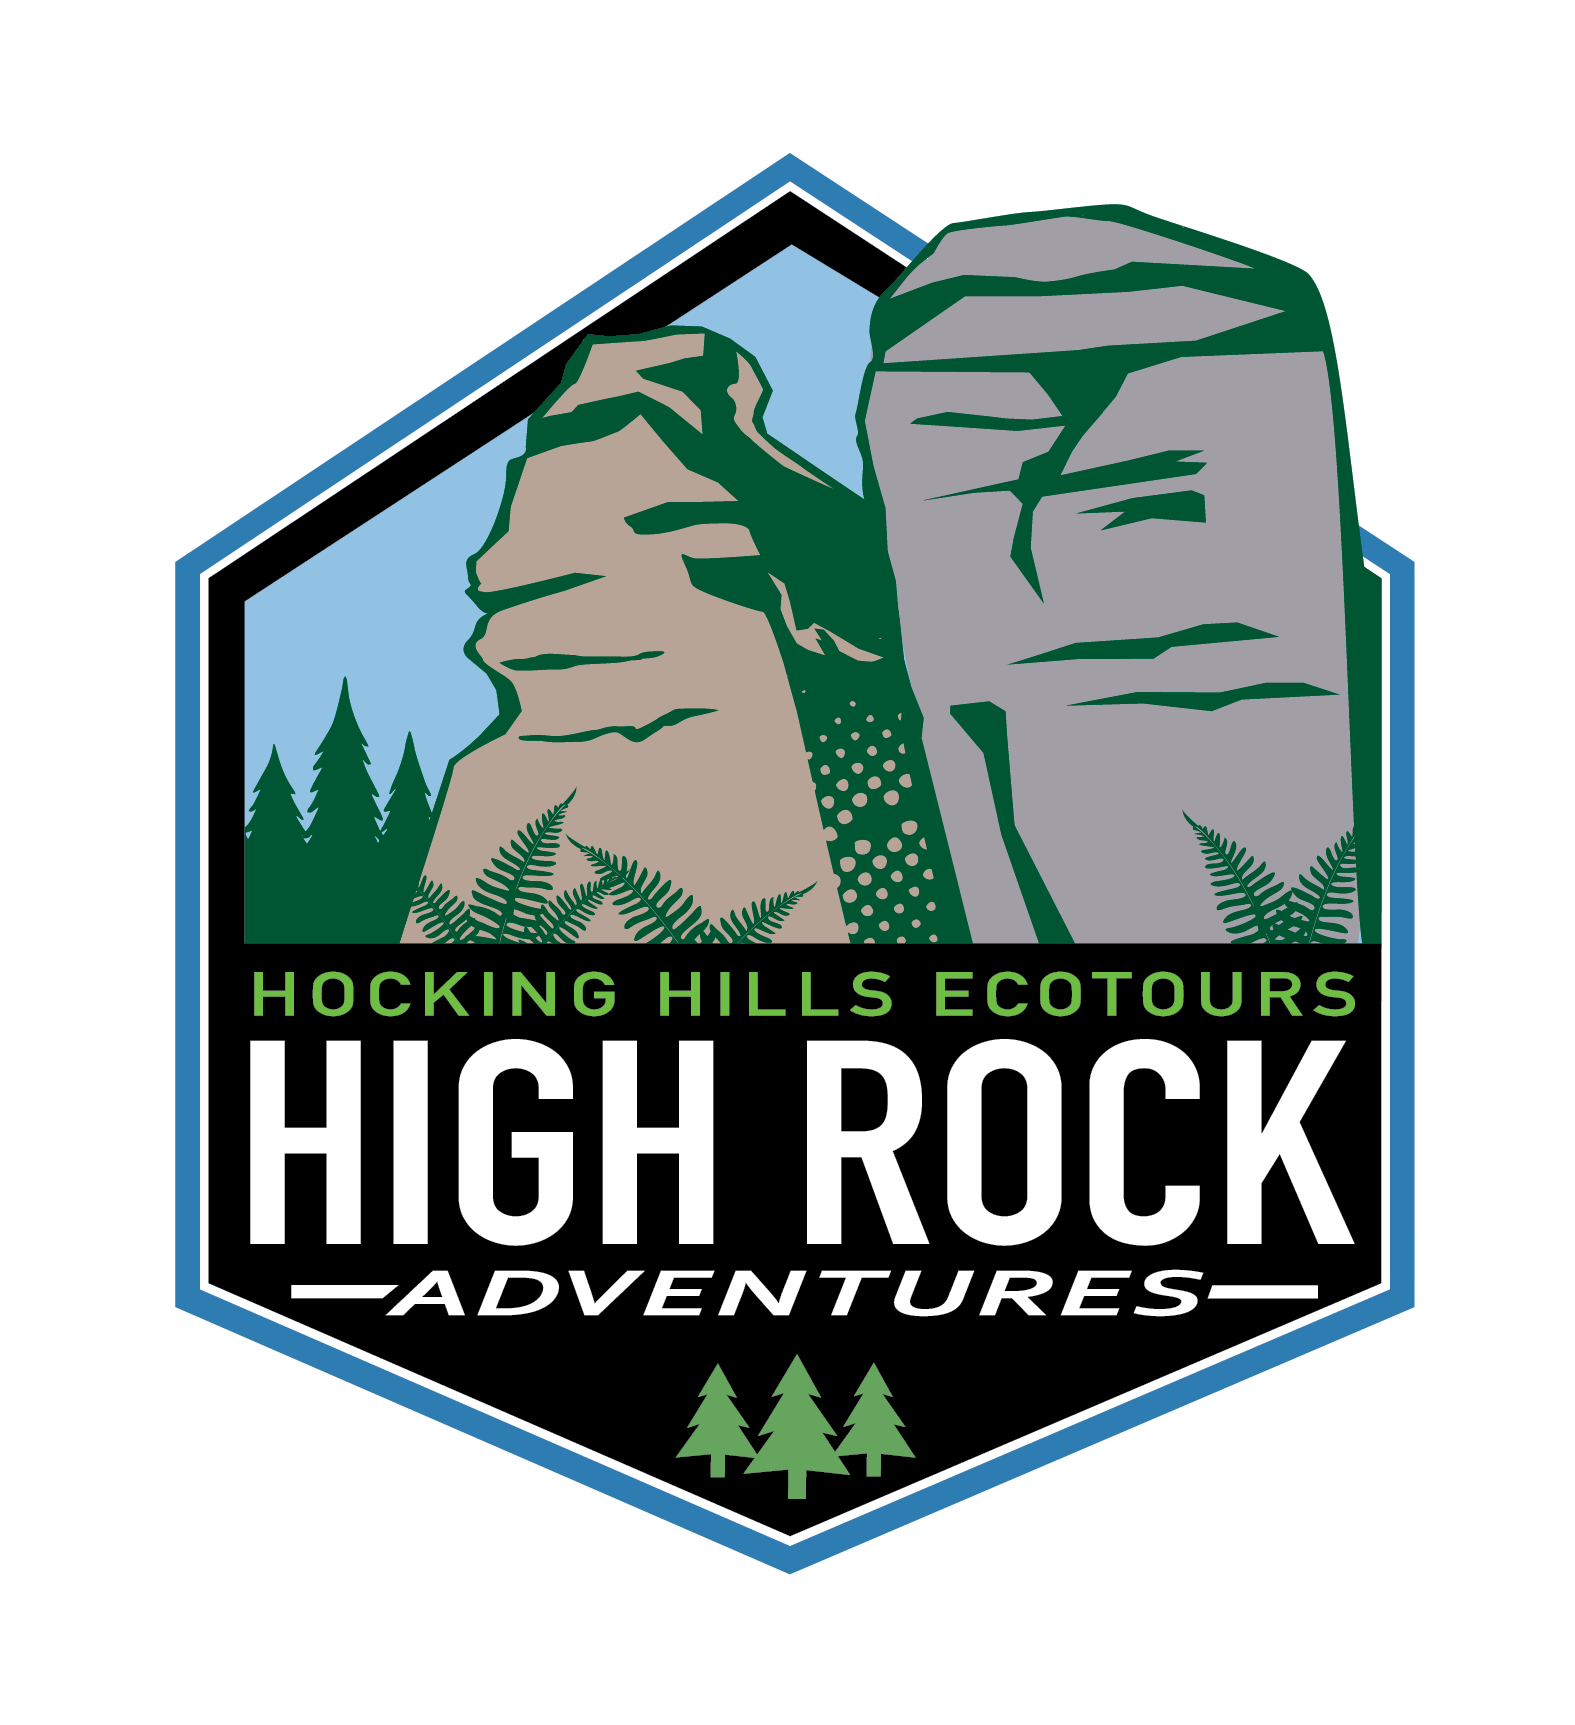 High Rock Adventures logo